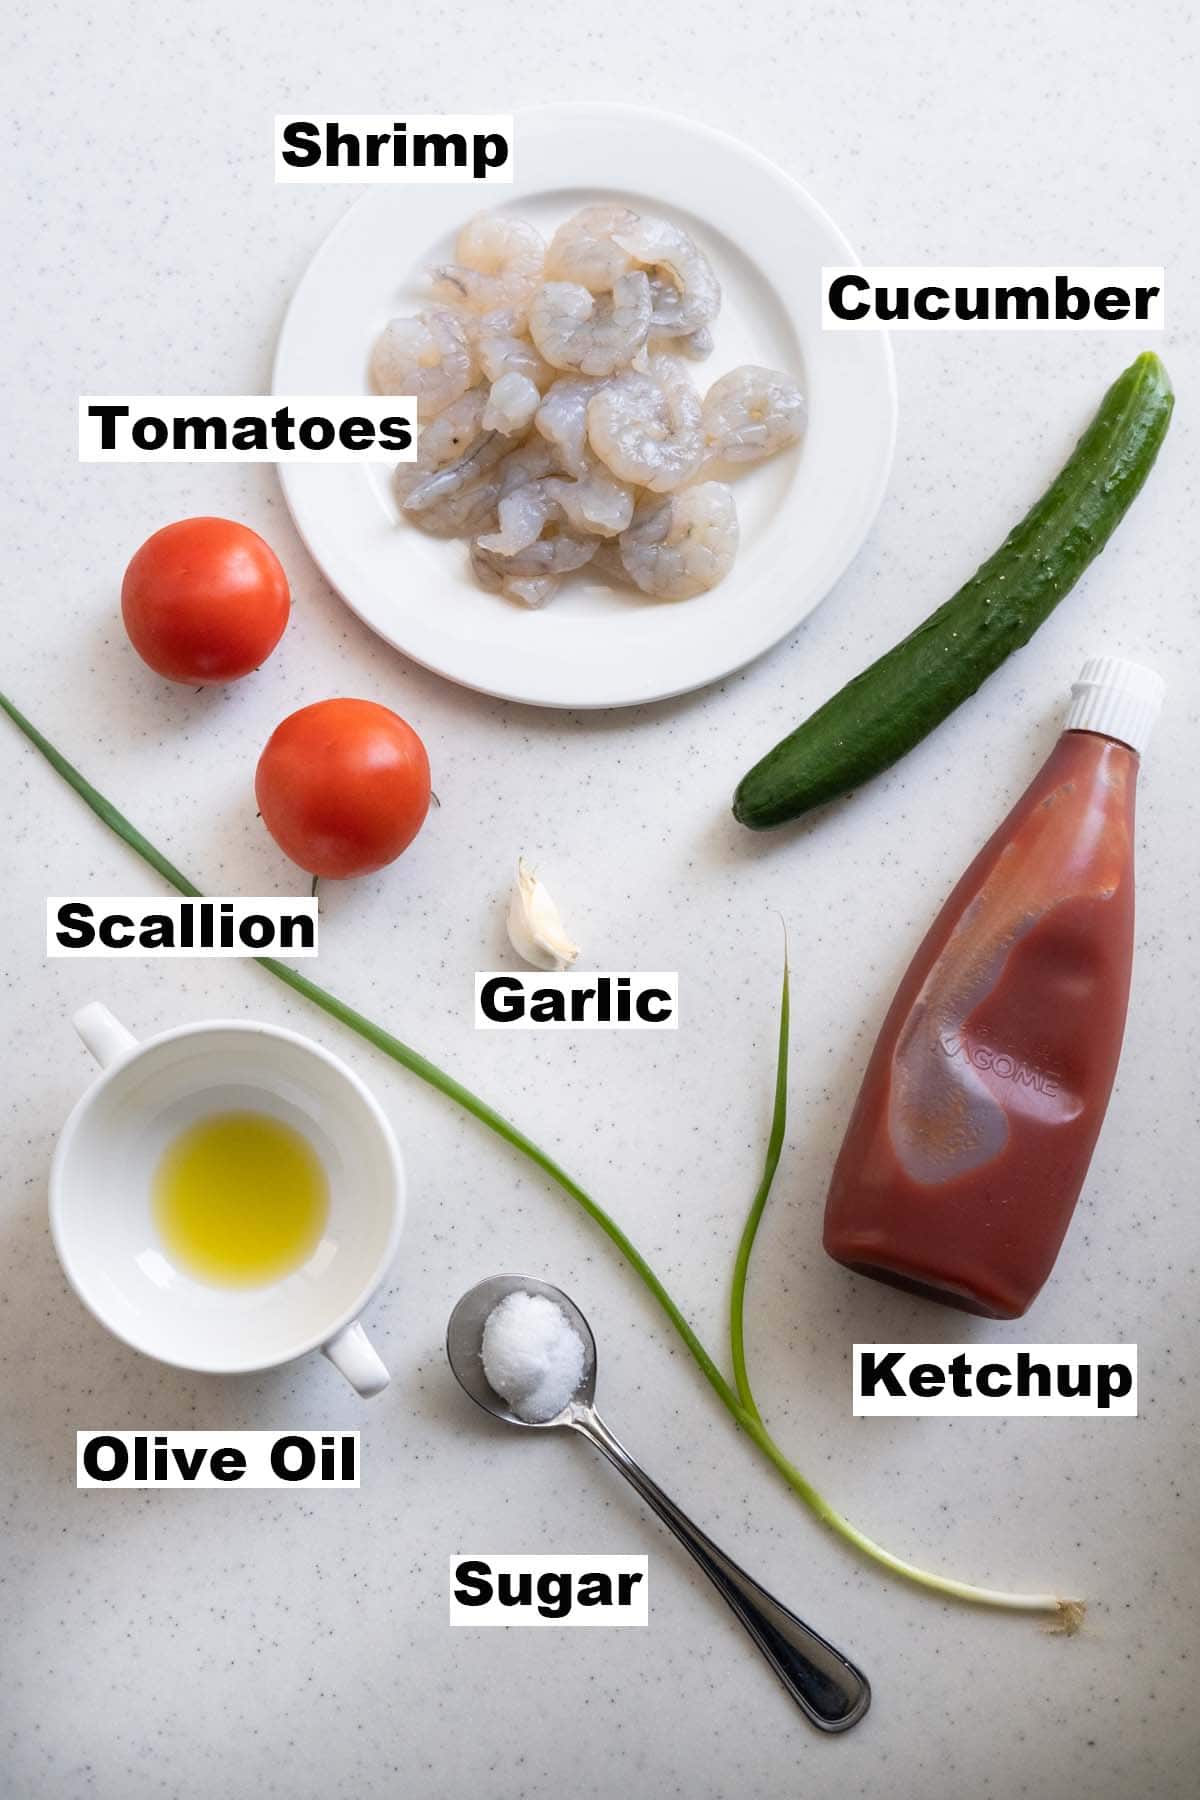 Tomato and shrimp salad ingredients.